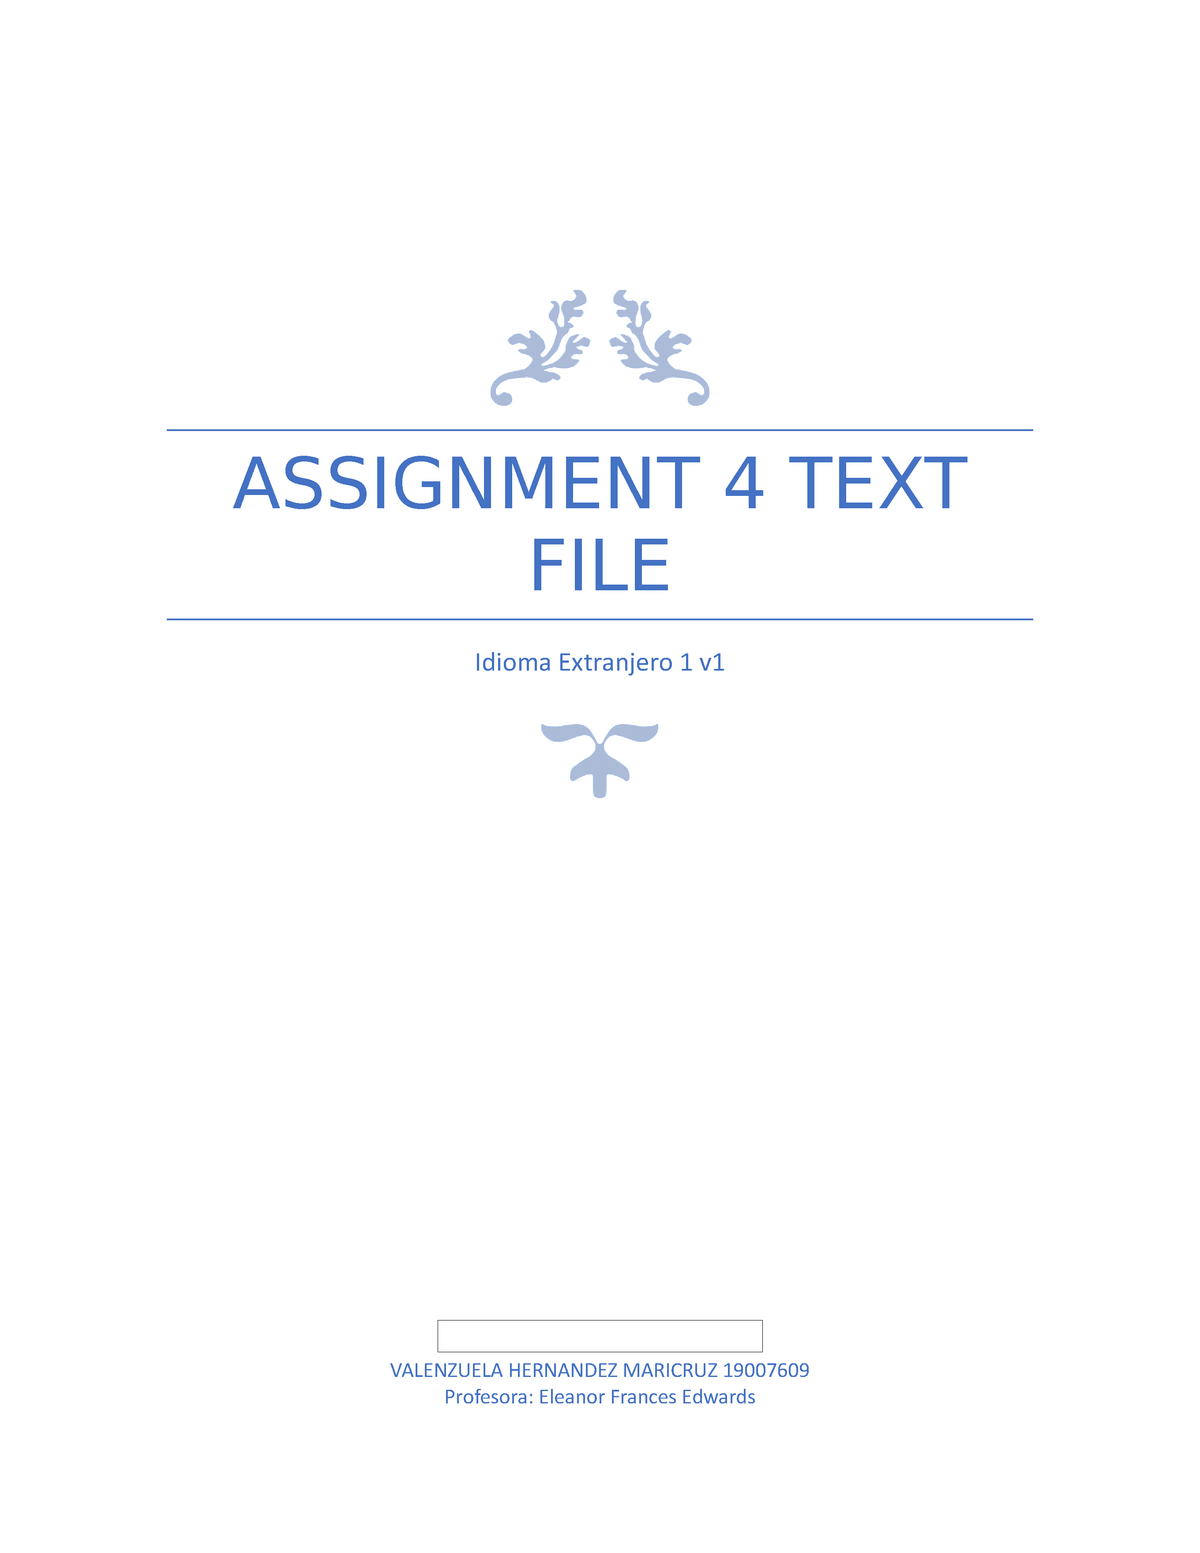 idioma extranjero 2 assignment 4 text file uveg